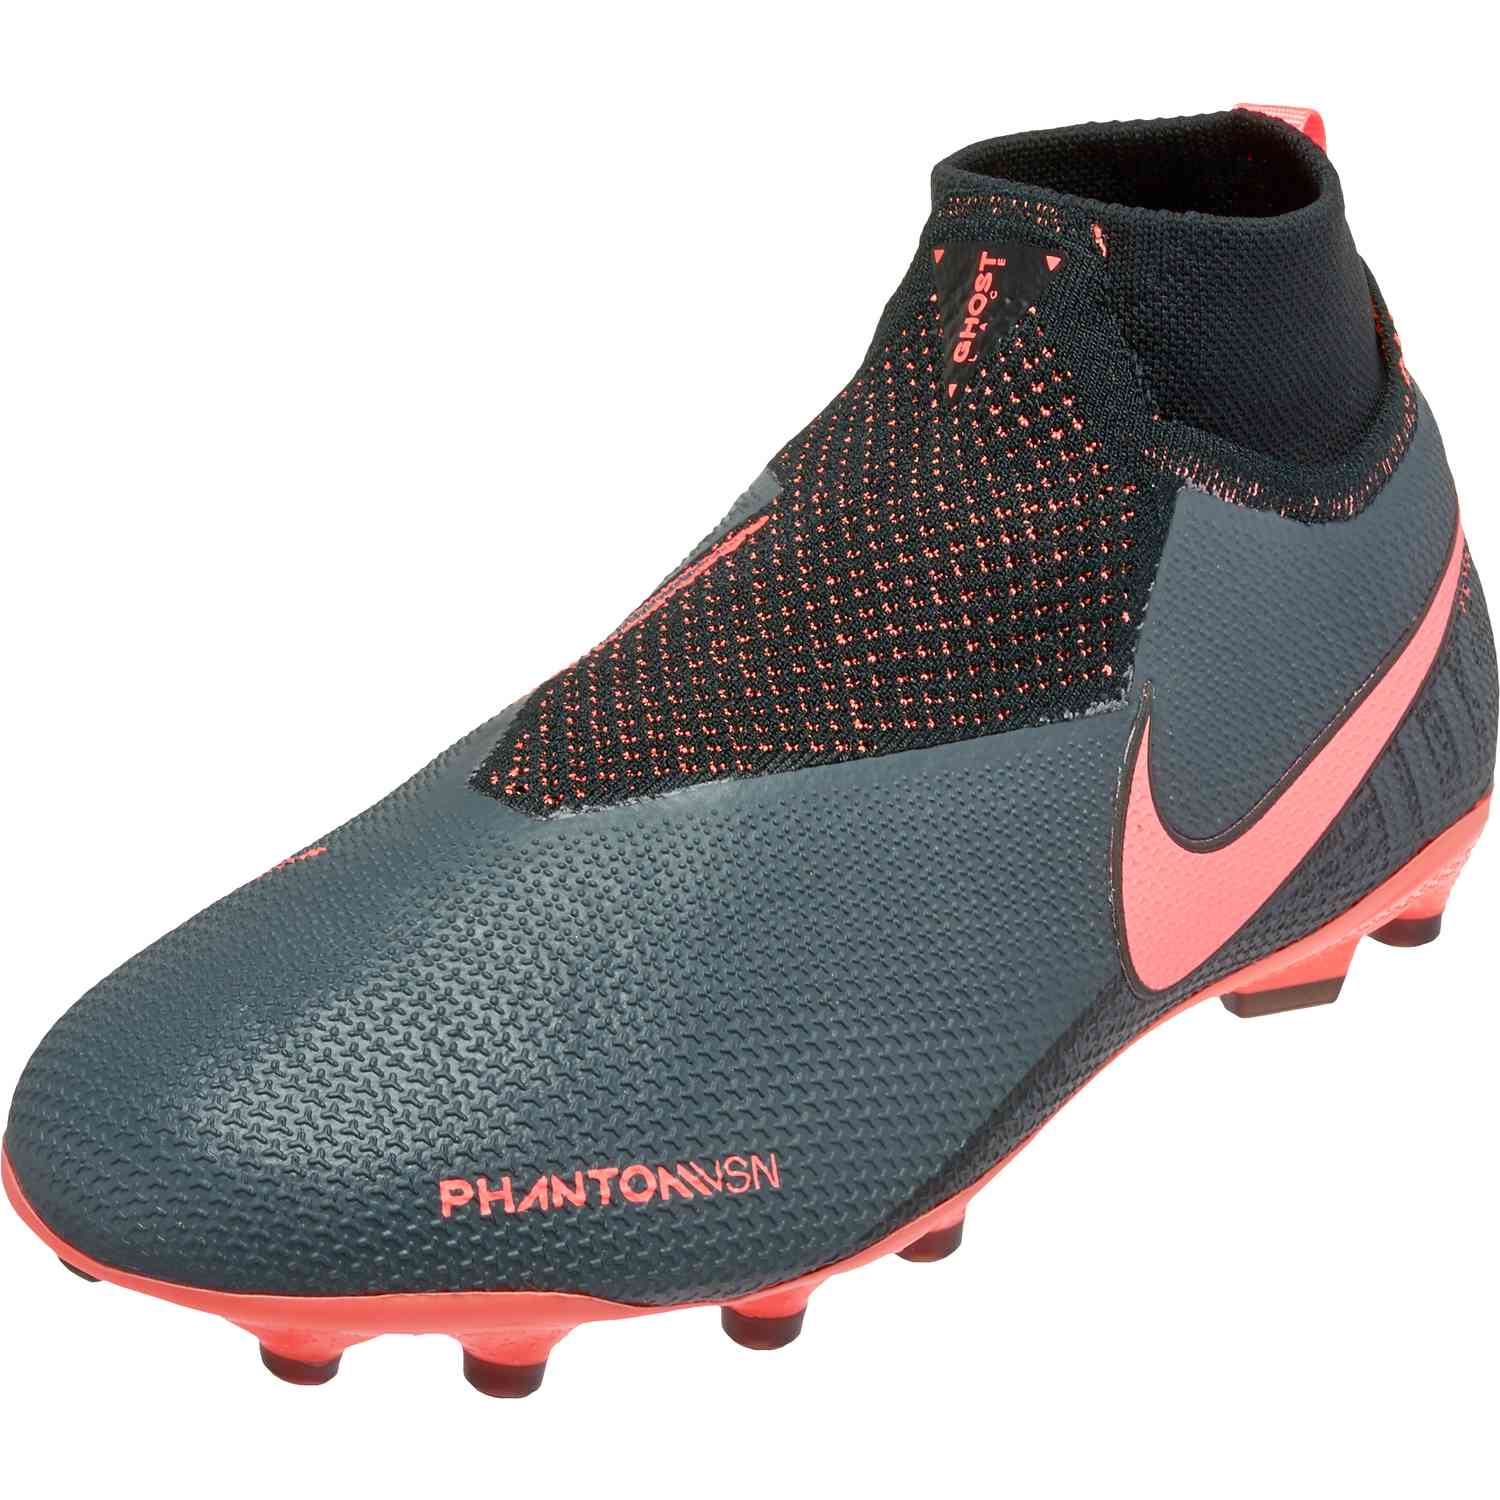 Nike Phantom Vision Zwarte Voetbalschoenen Kopen .